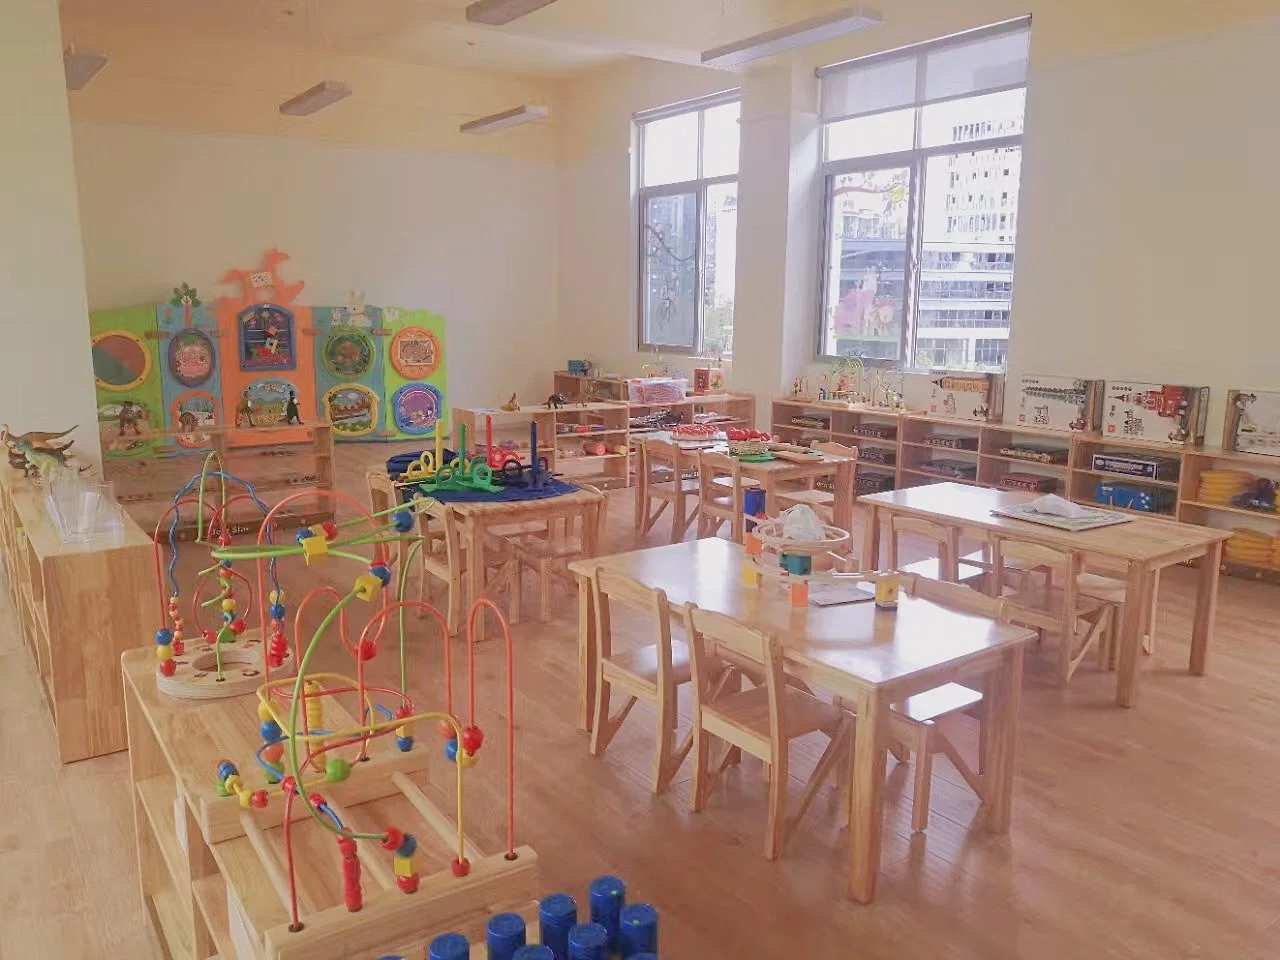 Kindermöbel, Schulklasse Studentenmöbel, Kinderzimmer und Kindergarten-Kindermöbel, Kinder Holzmöbel